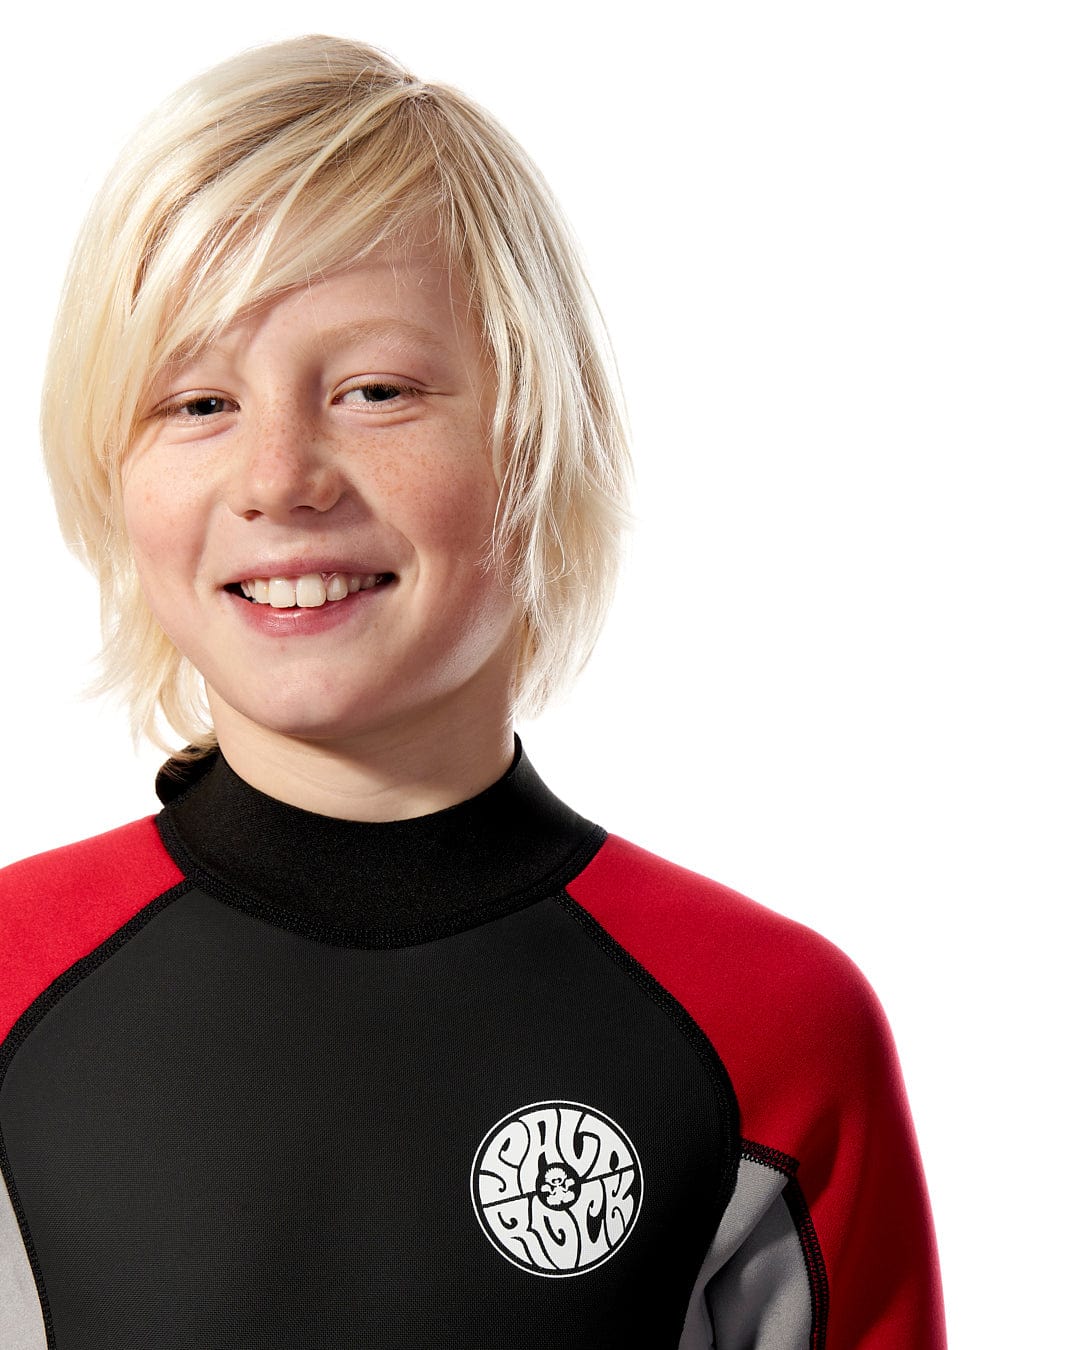 A young boy in a Saltrock neoprene wetsuit enjoying beach days.